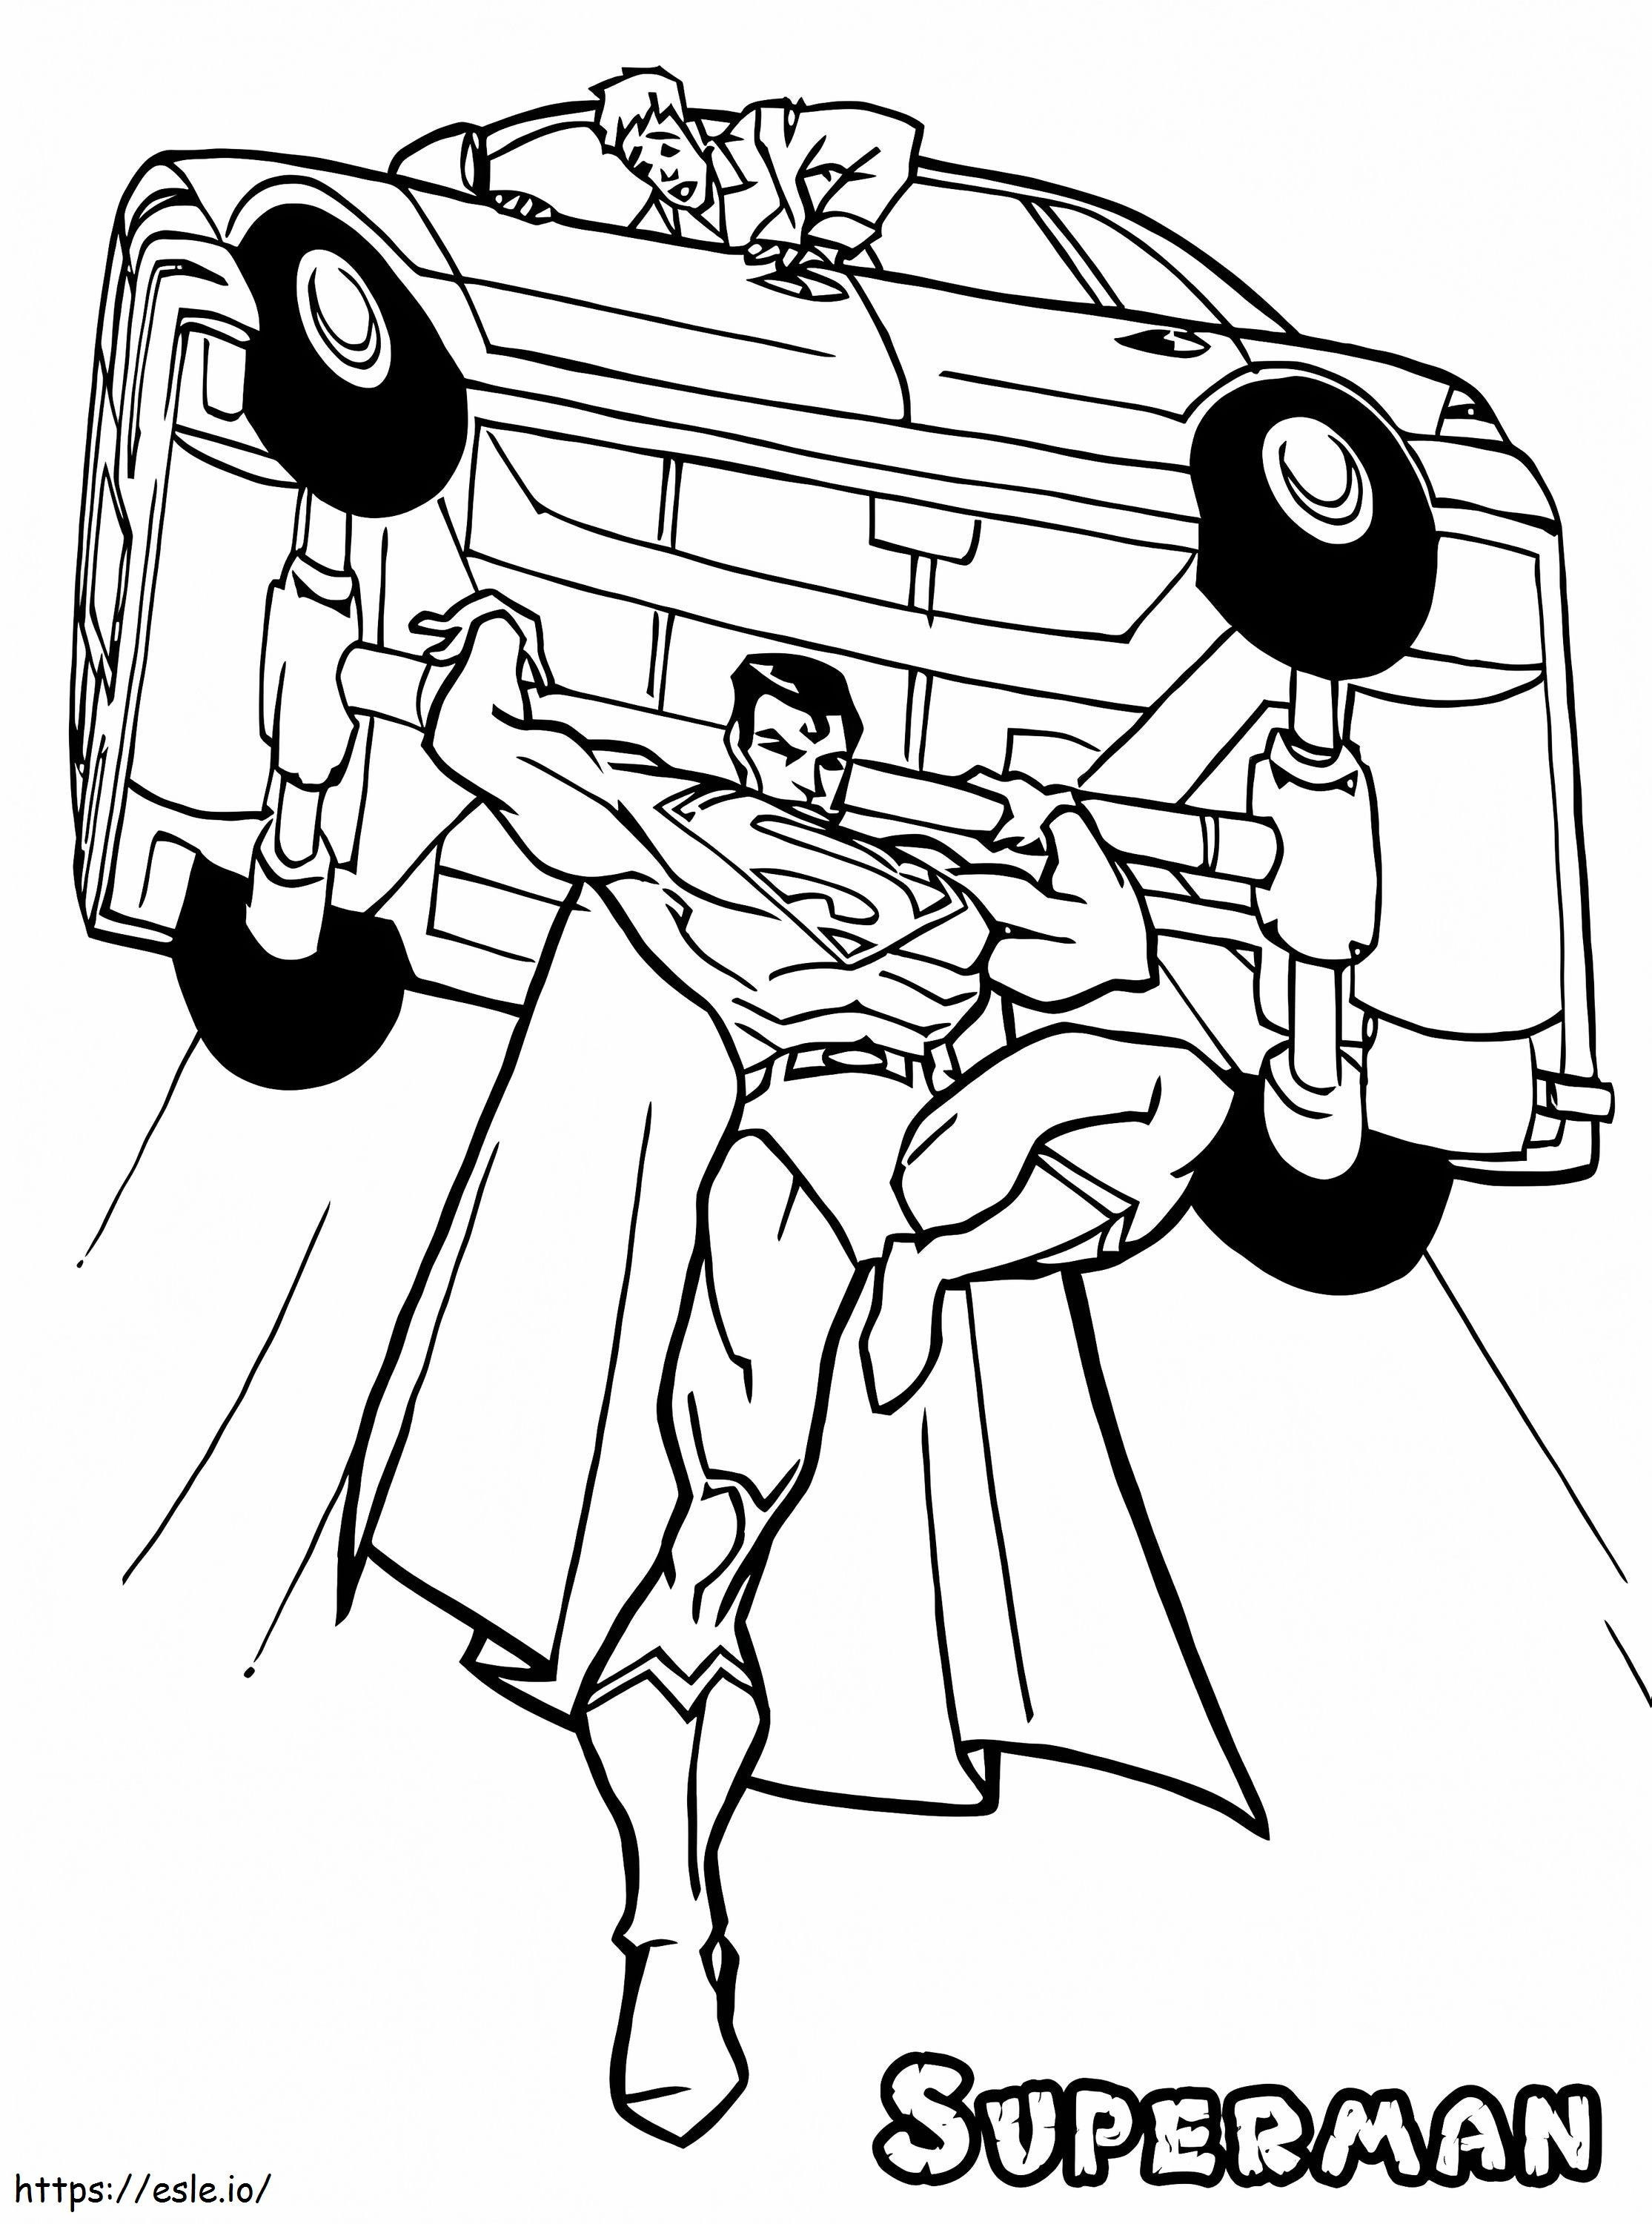 Superman hält ein Auto ausmalbilder